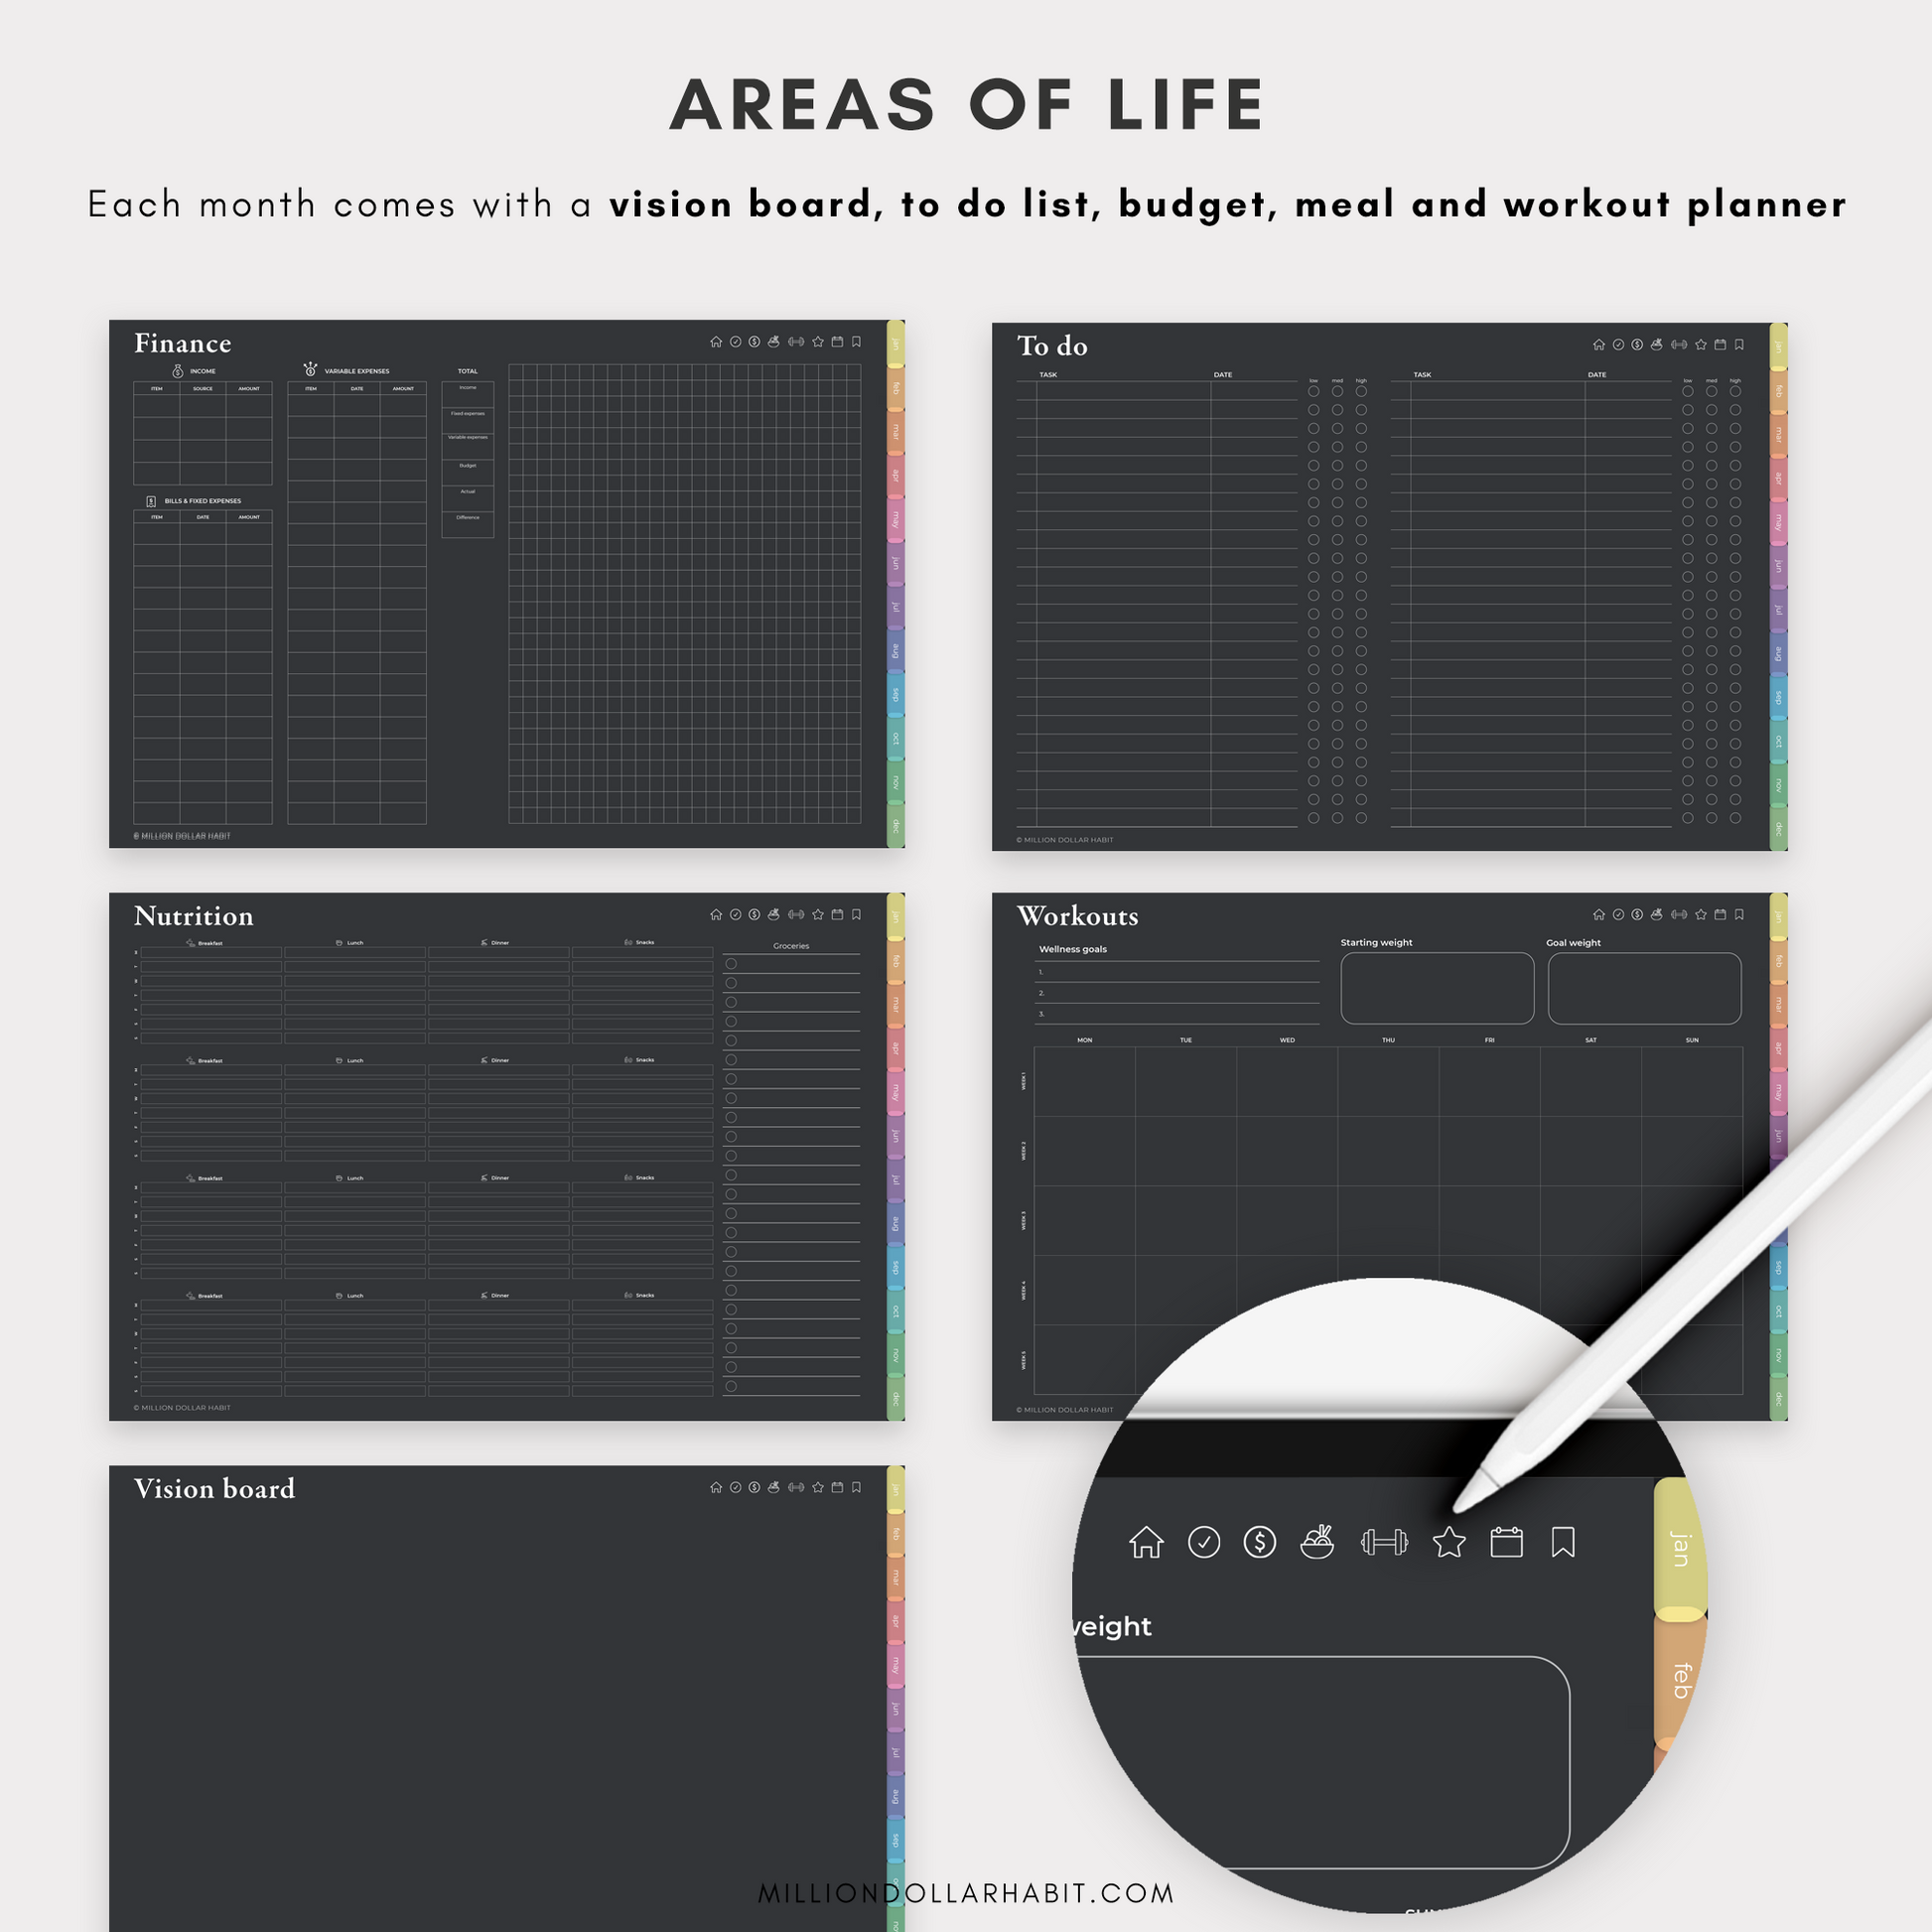 2024 Fully Hyperlinked Life Planner (w/ Links to Google & Apple Calendars +  Reminders)